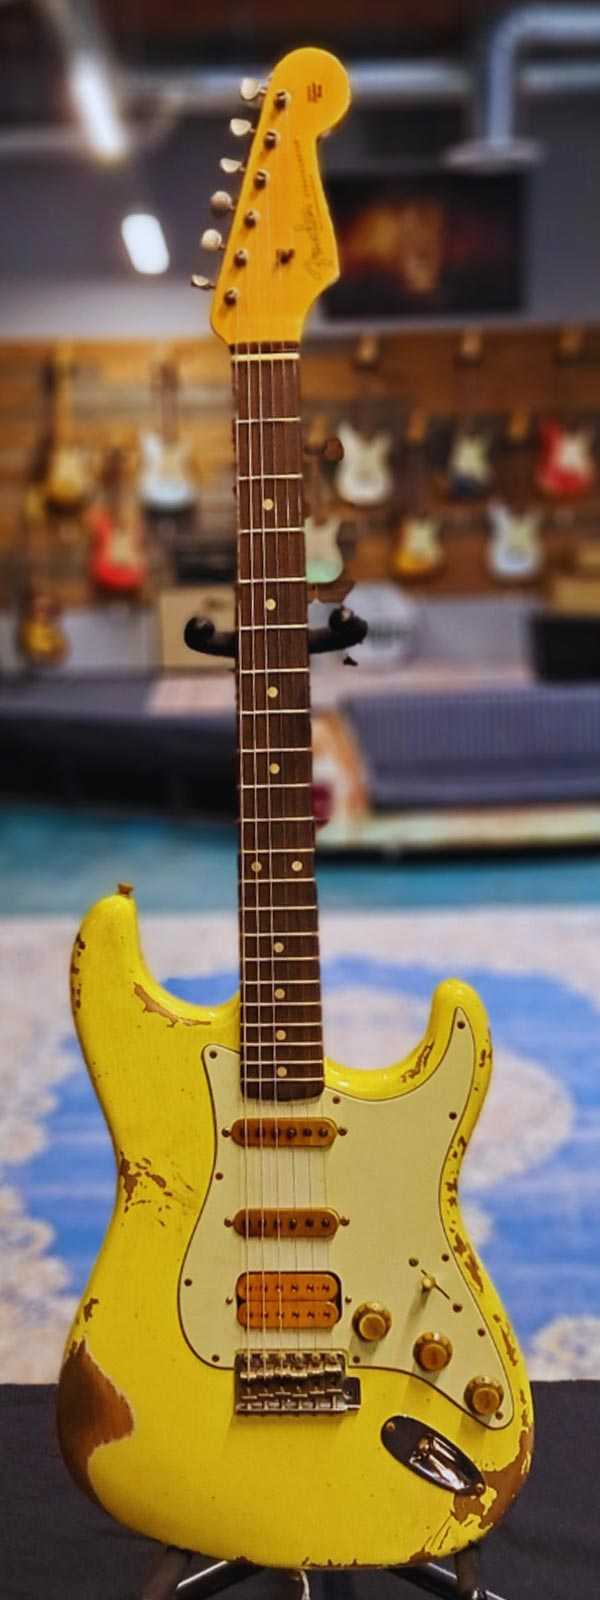 WildCat Exclusive Fender Custom Shop Alley Cat Strat “Vintage” Graffiti Yellow R121893